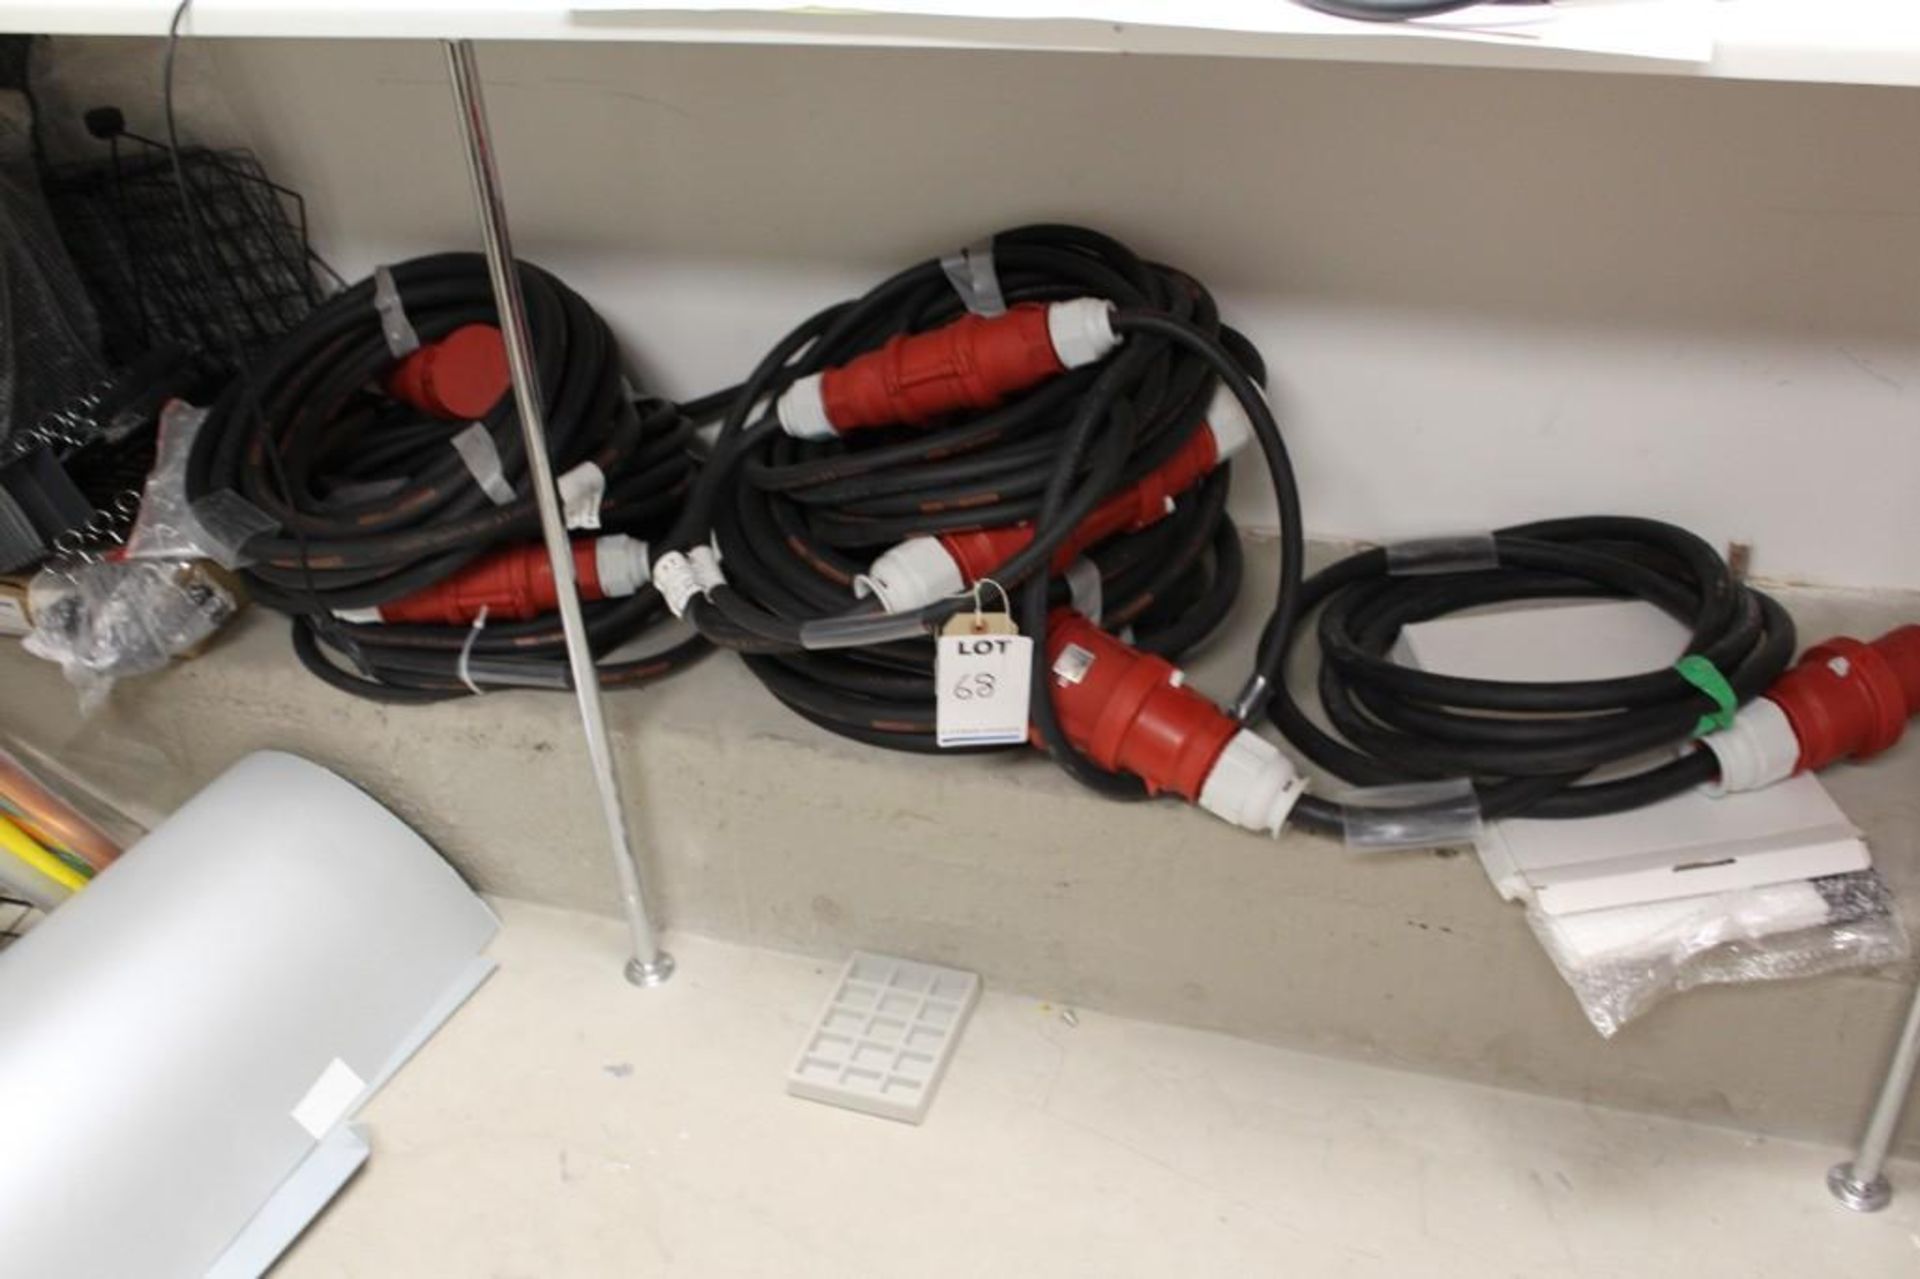 6x 415 Volt Extension cables